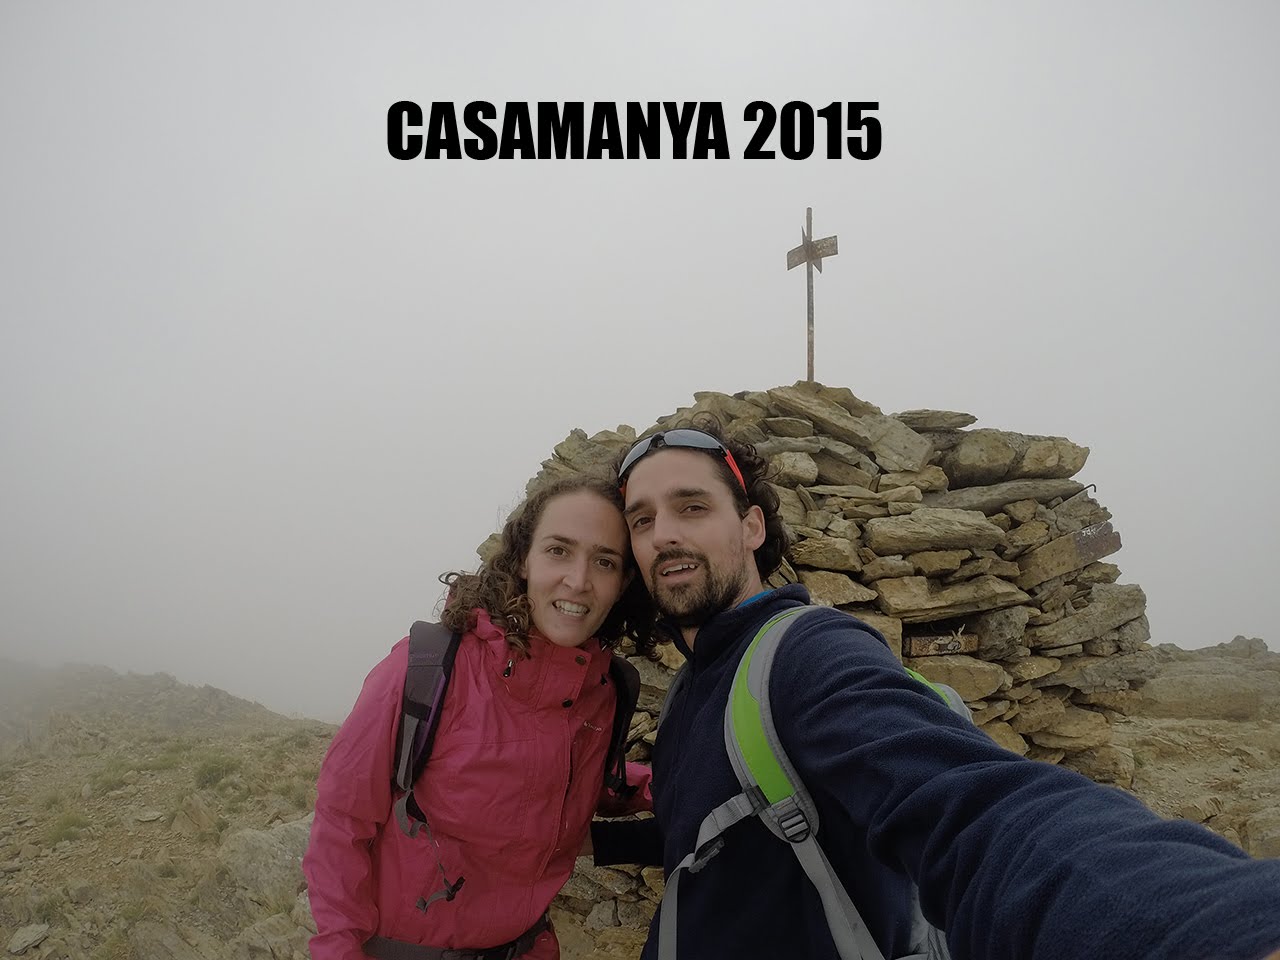 Pujada al Pic del Casamanya - Ordino Andorra 2015 de Rik_Ruk